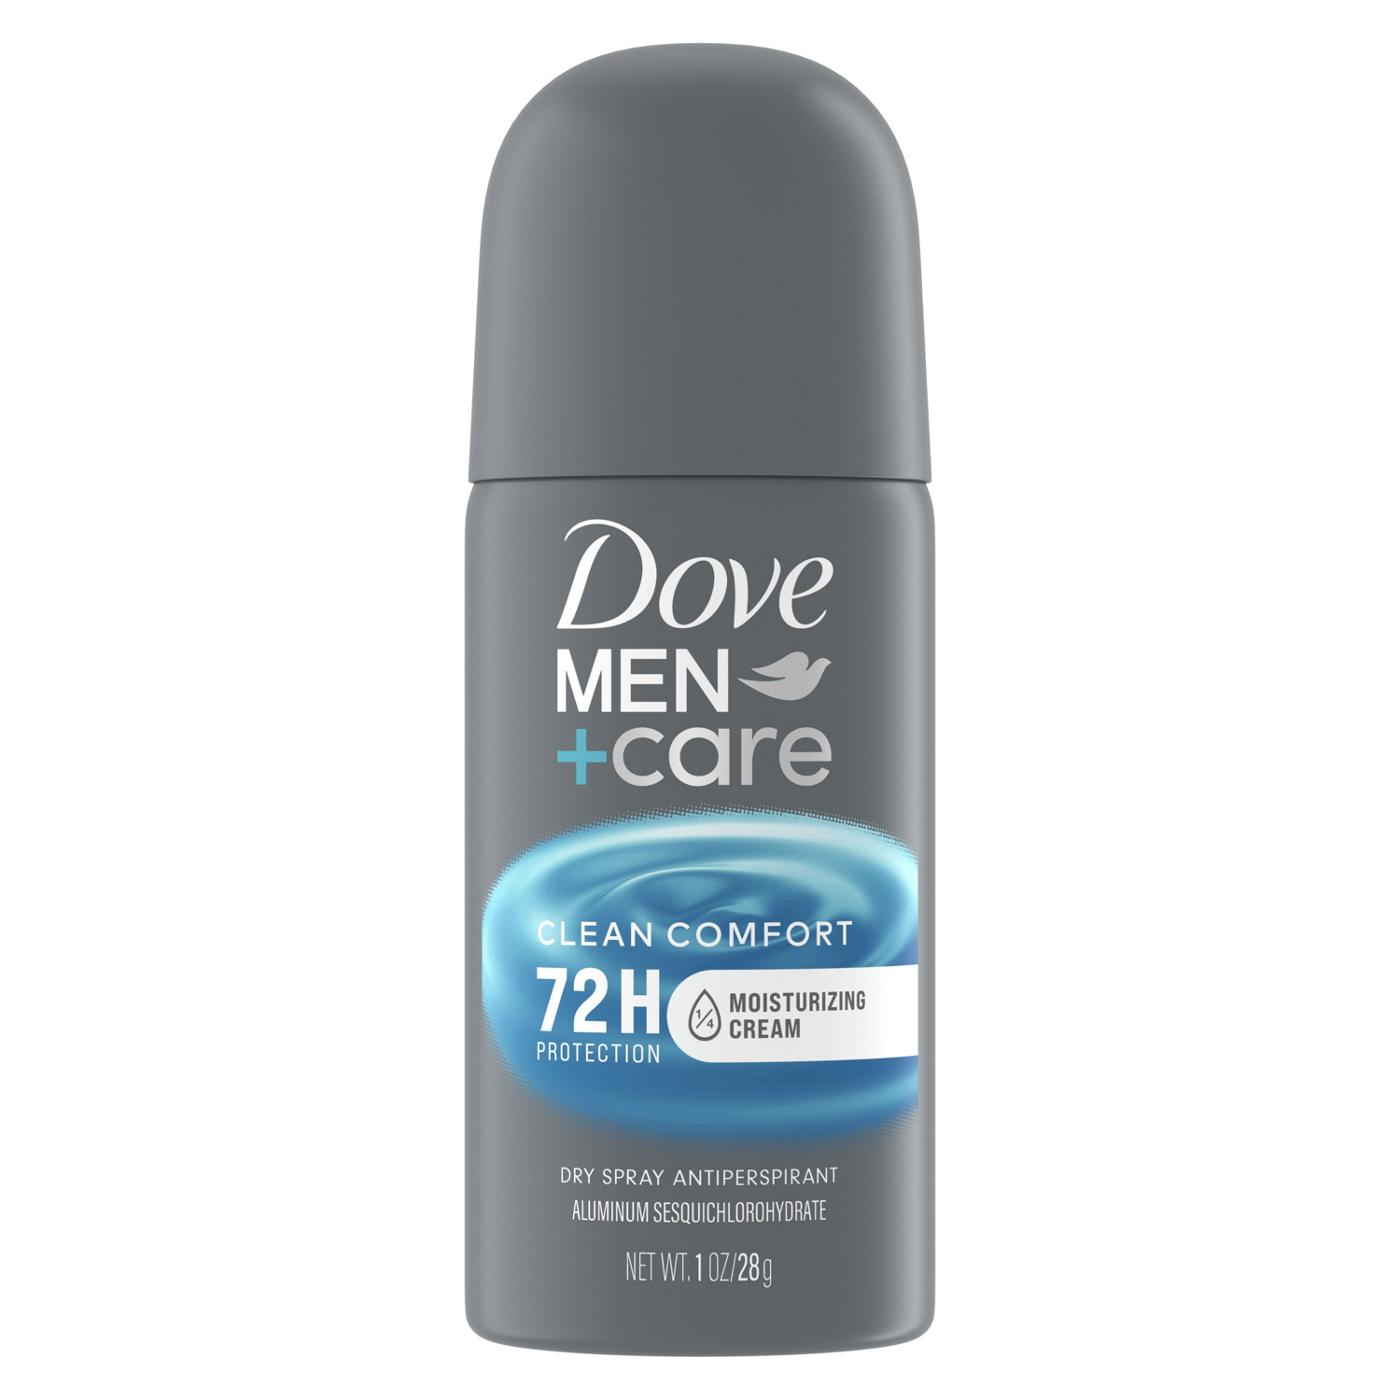 Dove Men+Care Antiperspirant Deodorant Dry Spray - Clean Comfort; image 1 of 2